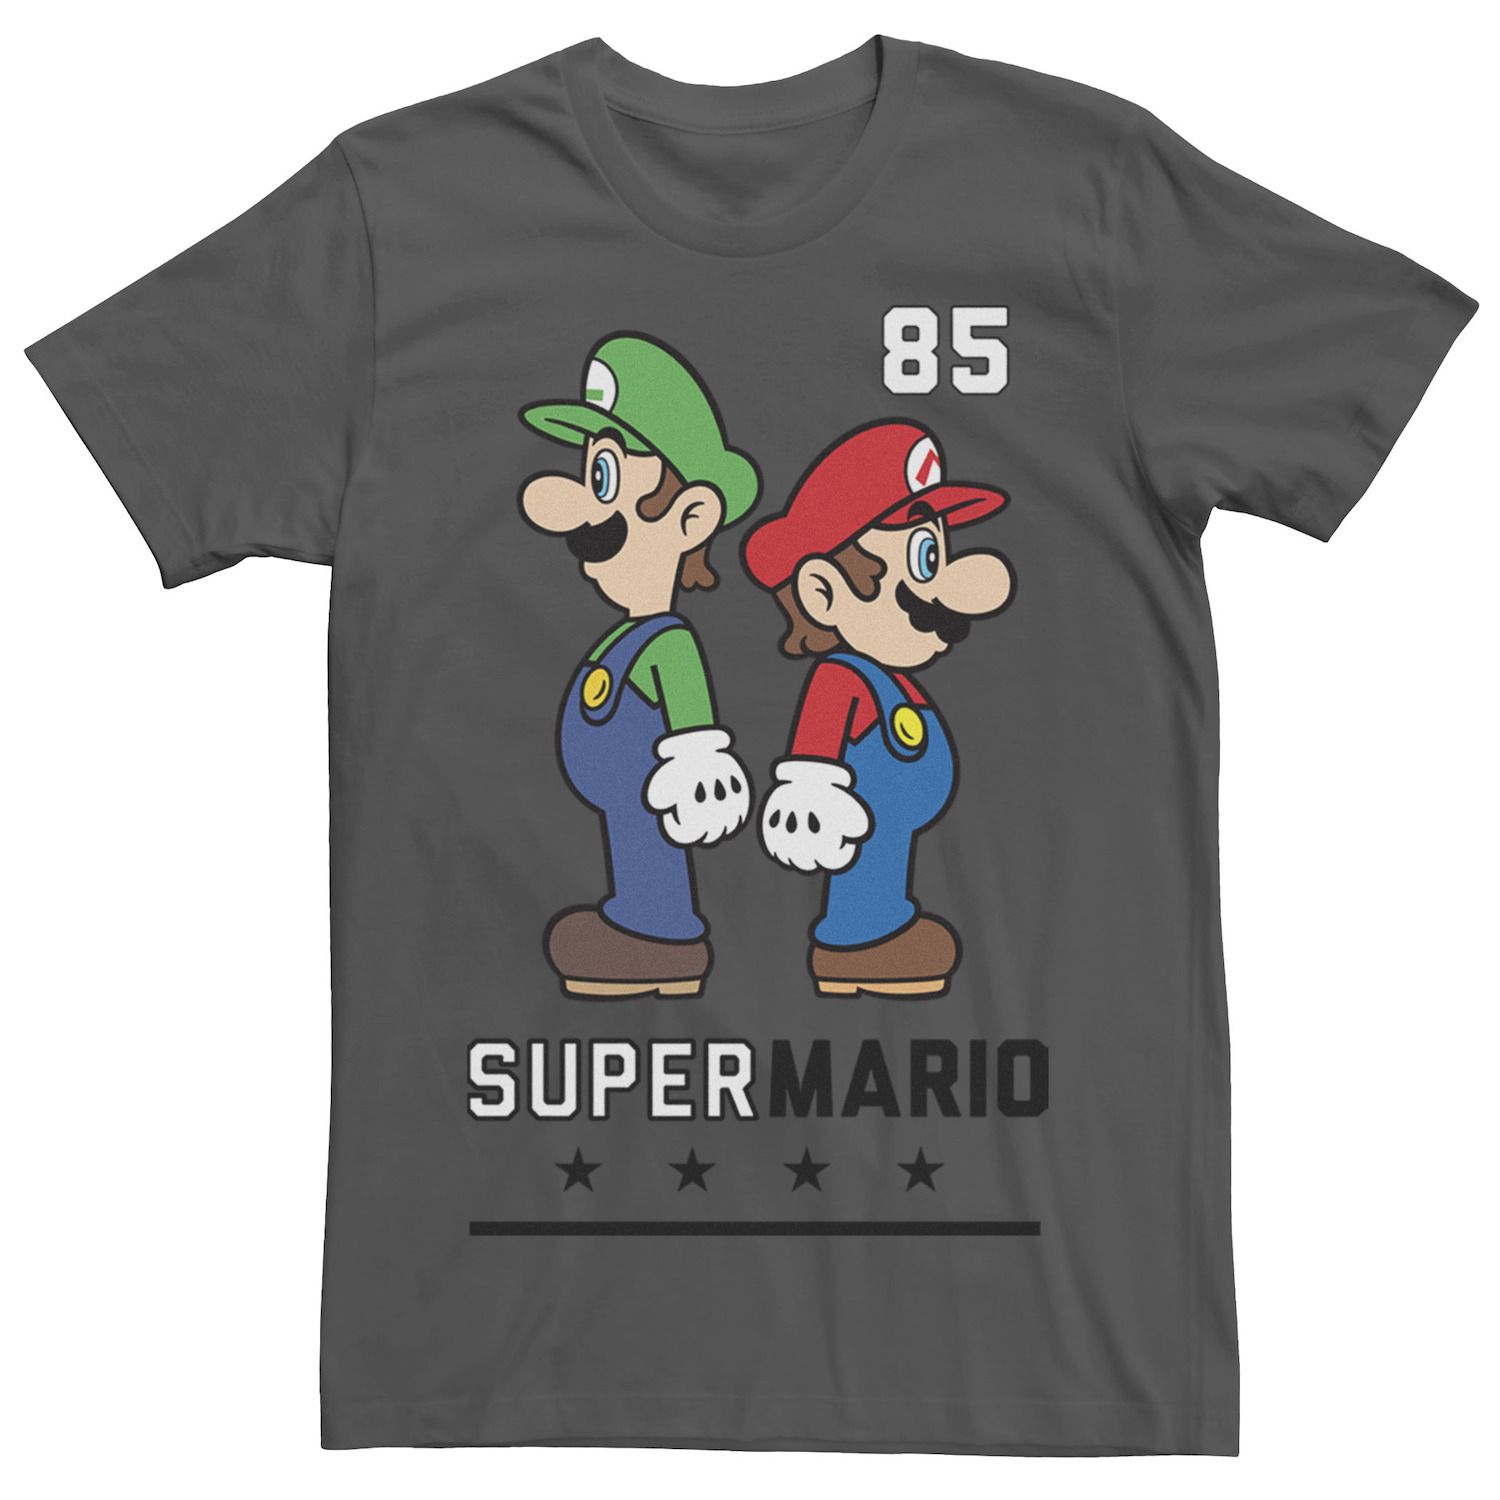 Мужская футболка Nintendo Super Mario Luigi Back to Back Athletic 85 Licensed Character